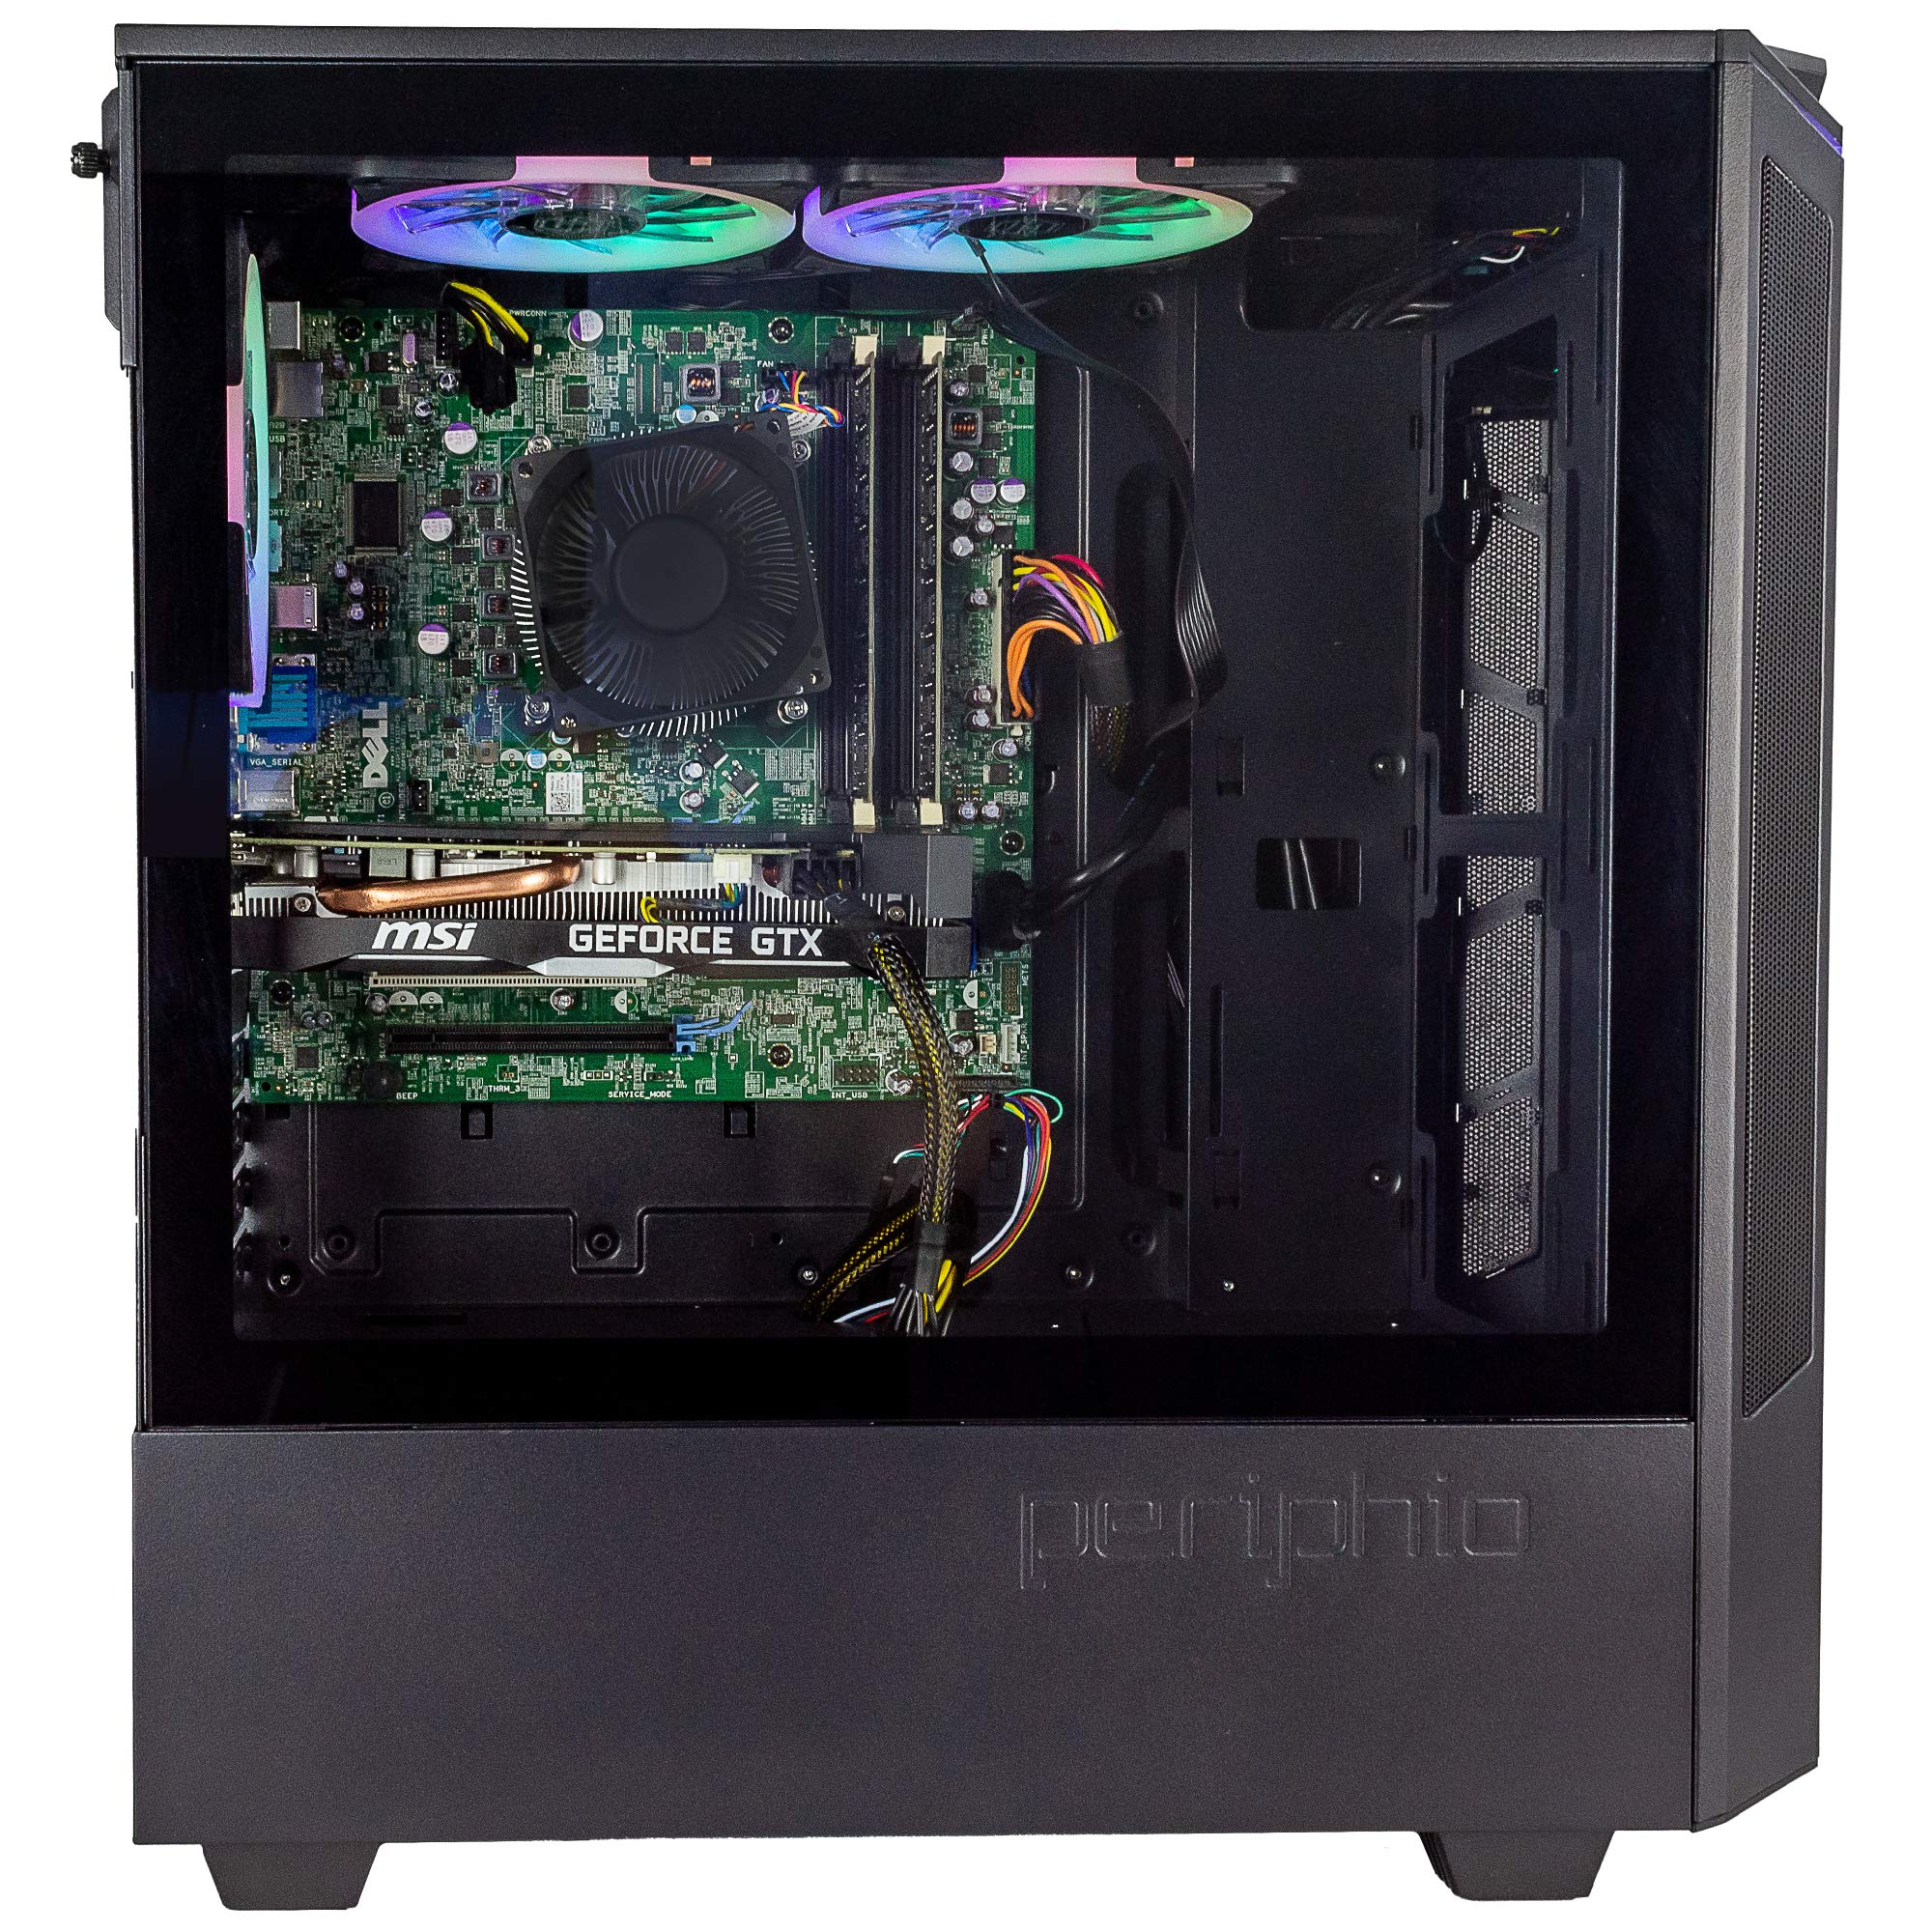 Periphio Phantom RGB Gaming Computer, Intel Quad-Core i7 3.3GHz, GeForce GTX 1650 GPU (4GB), 16GB RAM, 500GB SSD + 1TB HDD, Windows 10 Gaming PC, WiFi (Renewed)